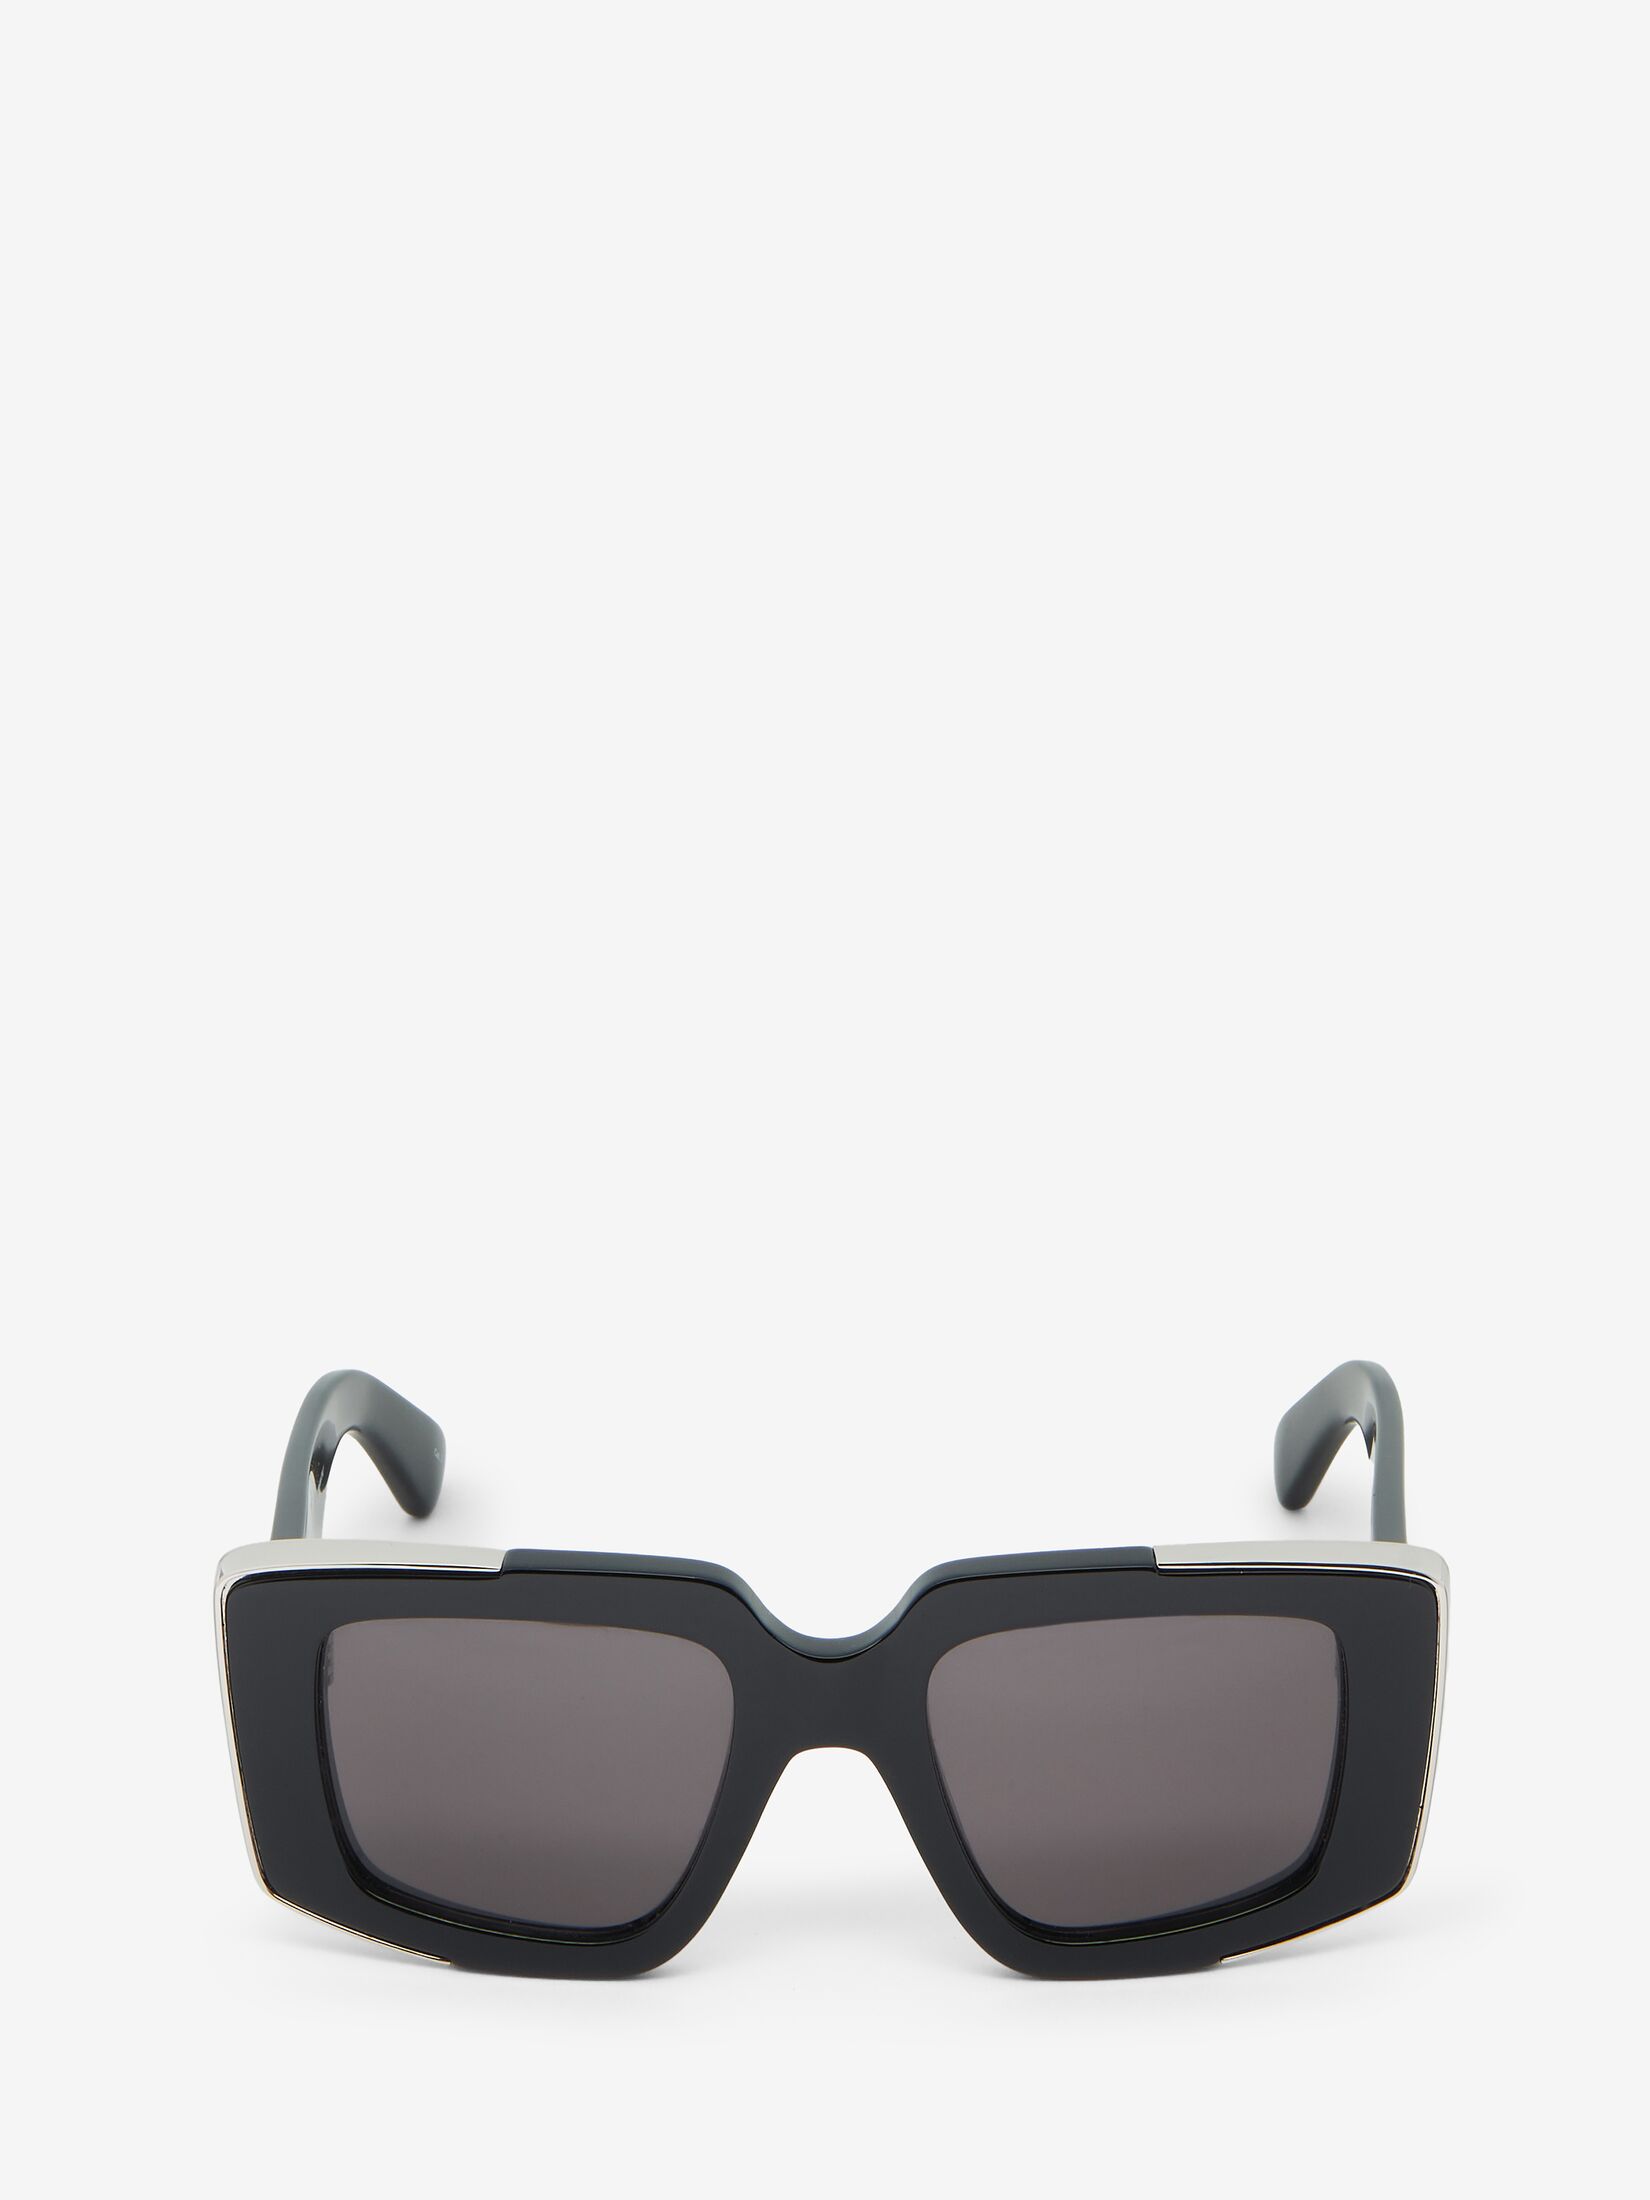 The Grip Geometrical Sunglasses